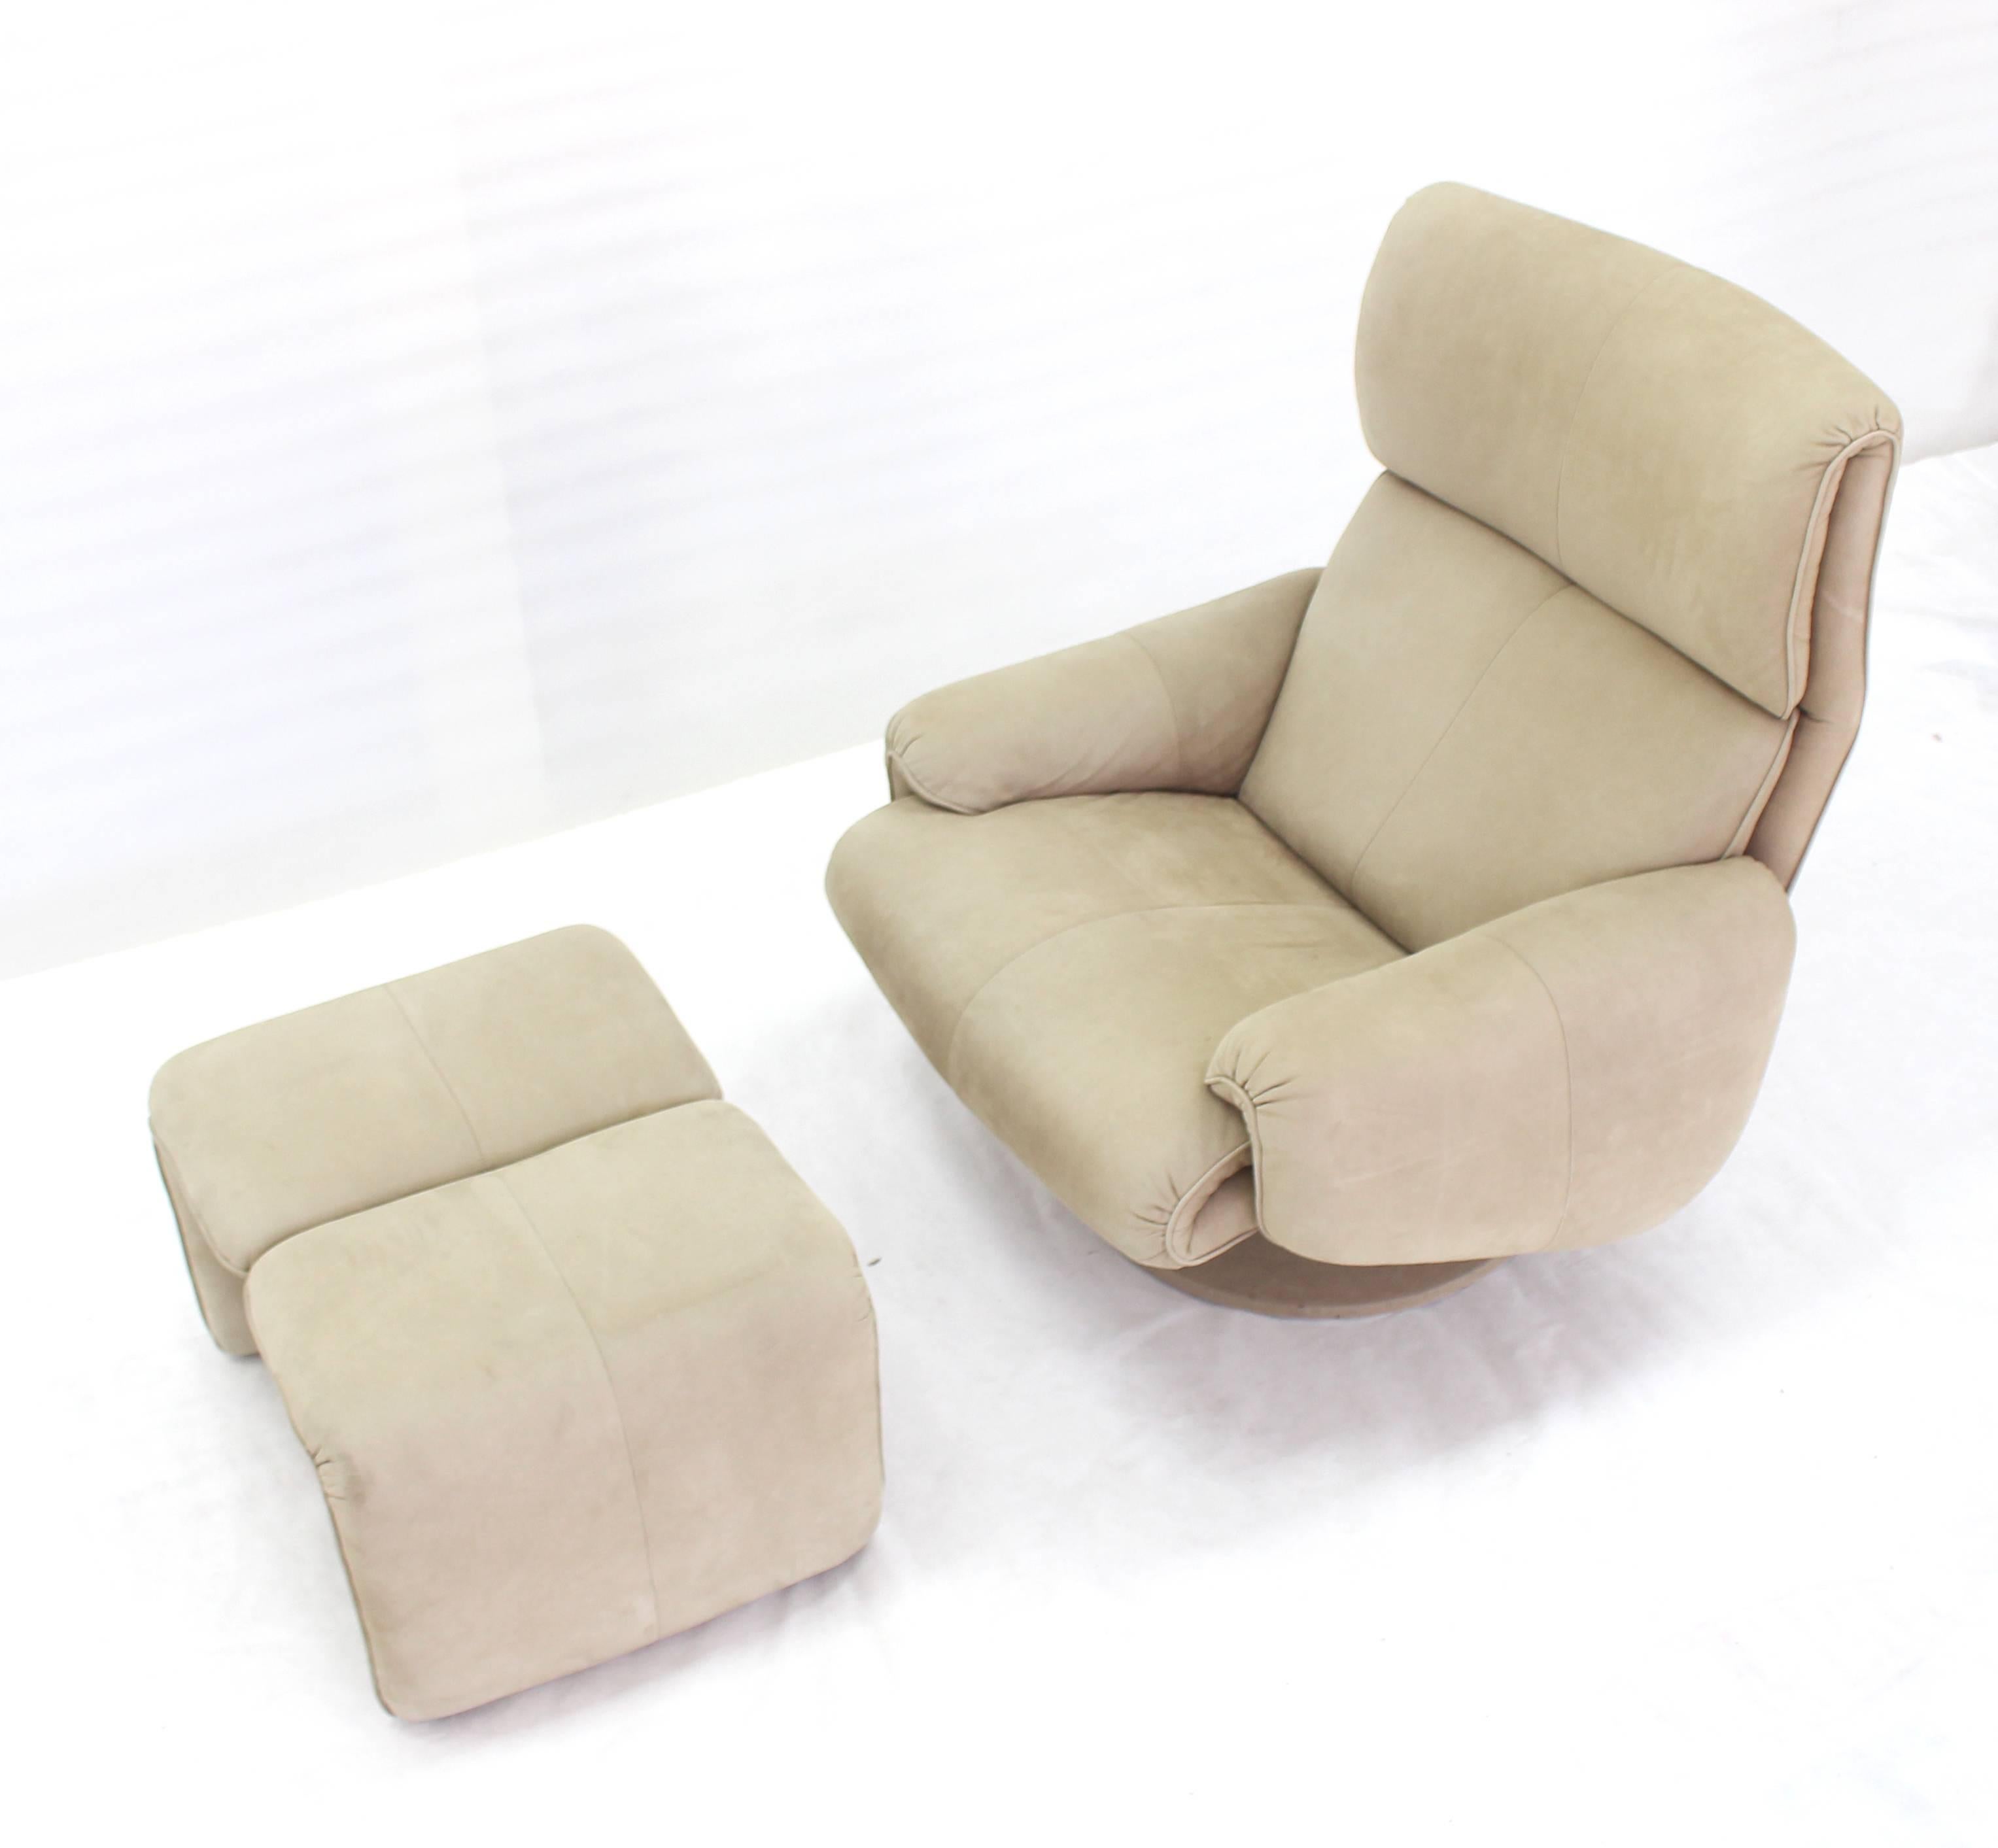 Very nice Mid-Century Modern swivel lounge chair with matching foot stool.
25 x 20 x 38 - ottoman.